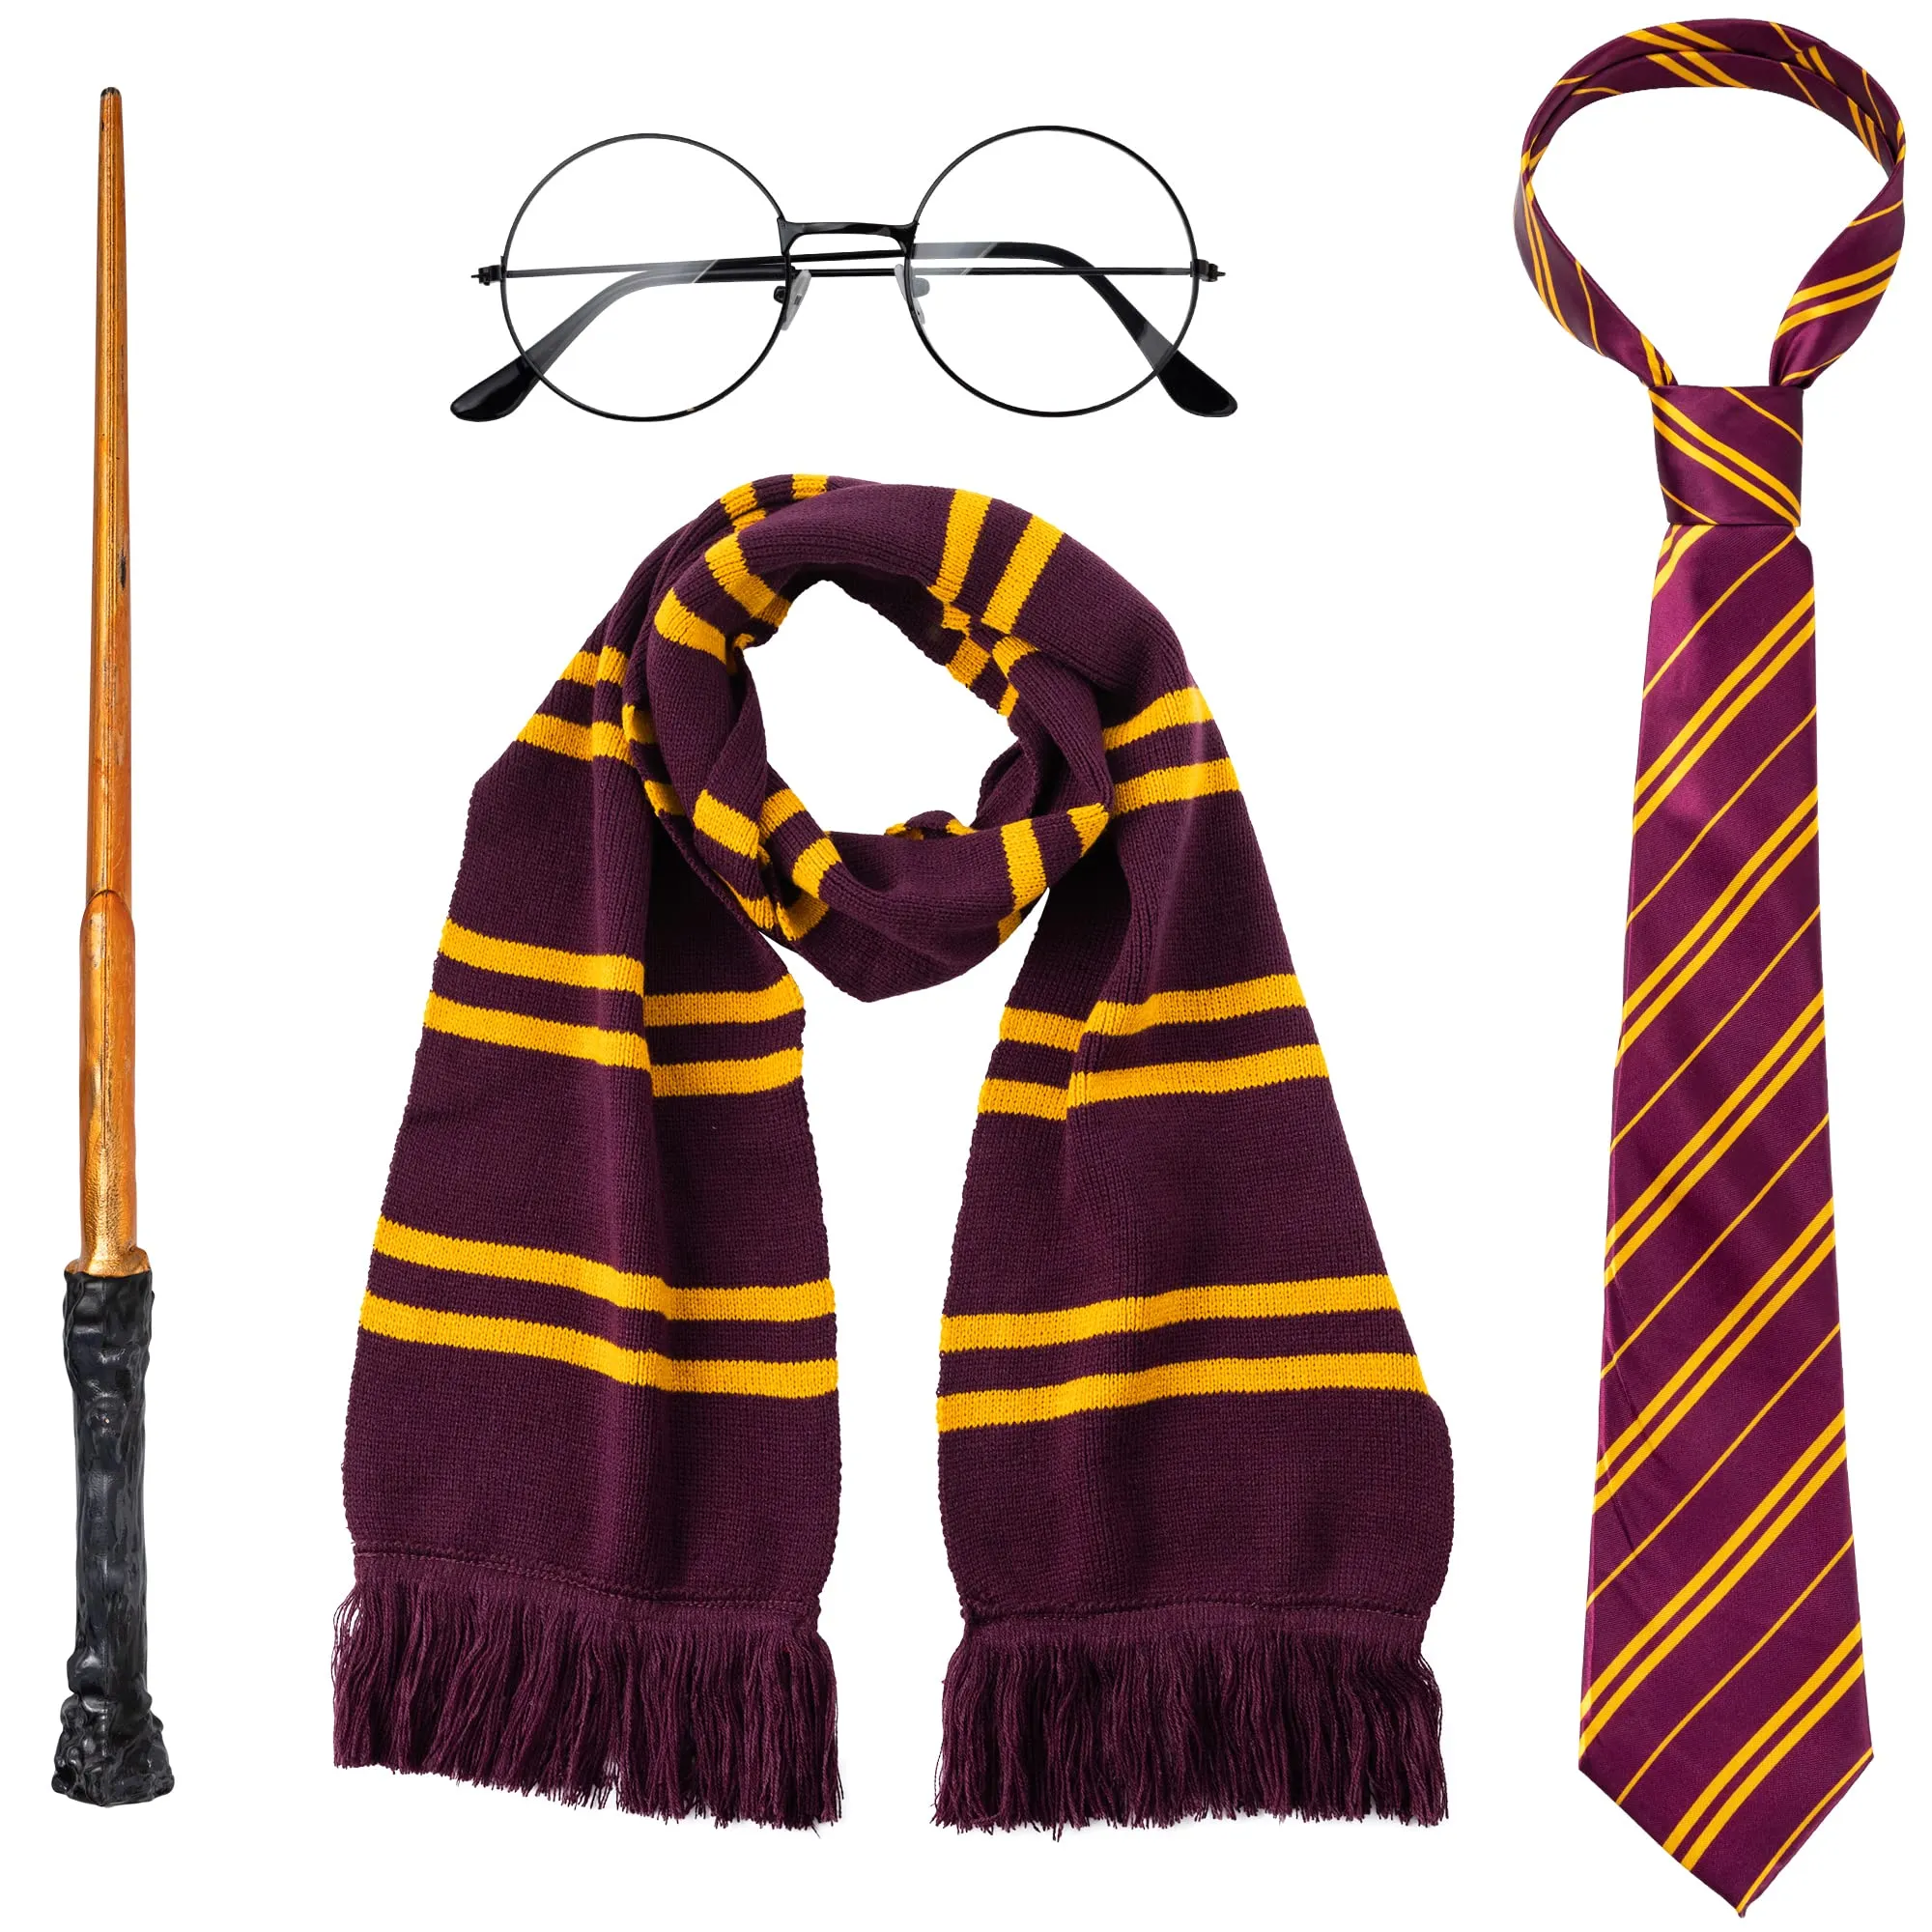 Harry Potter Costumes set